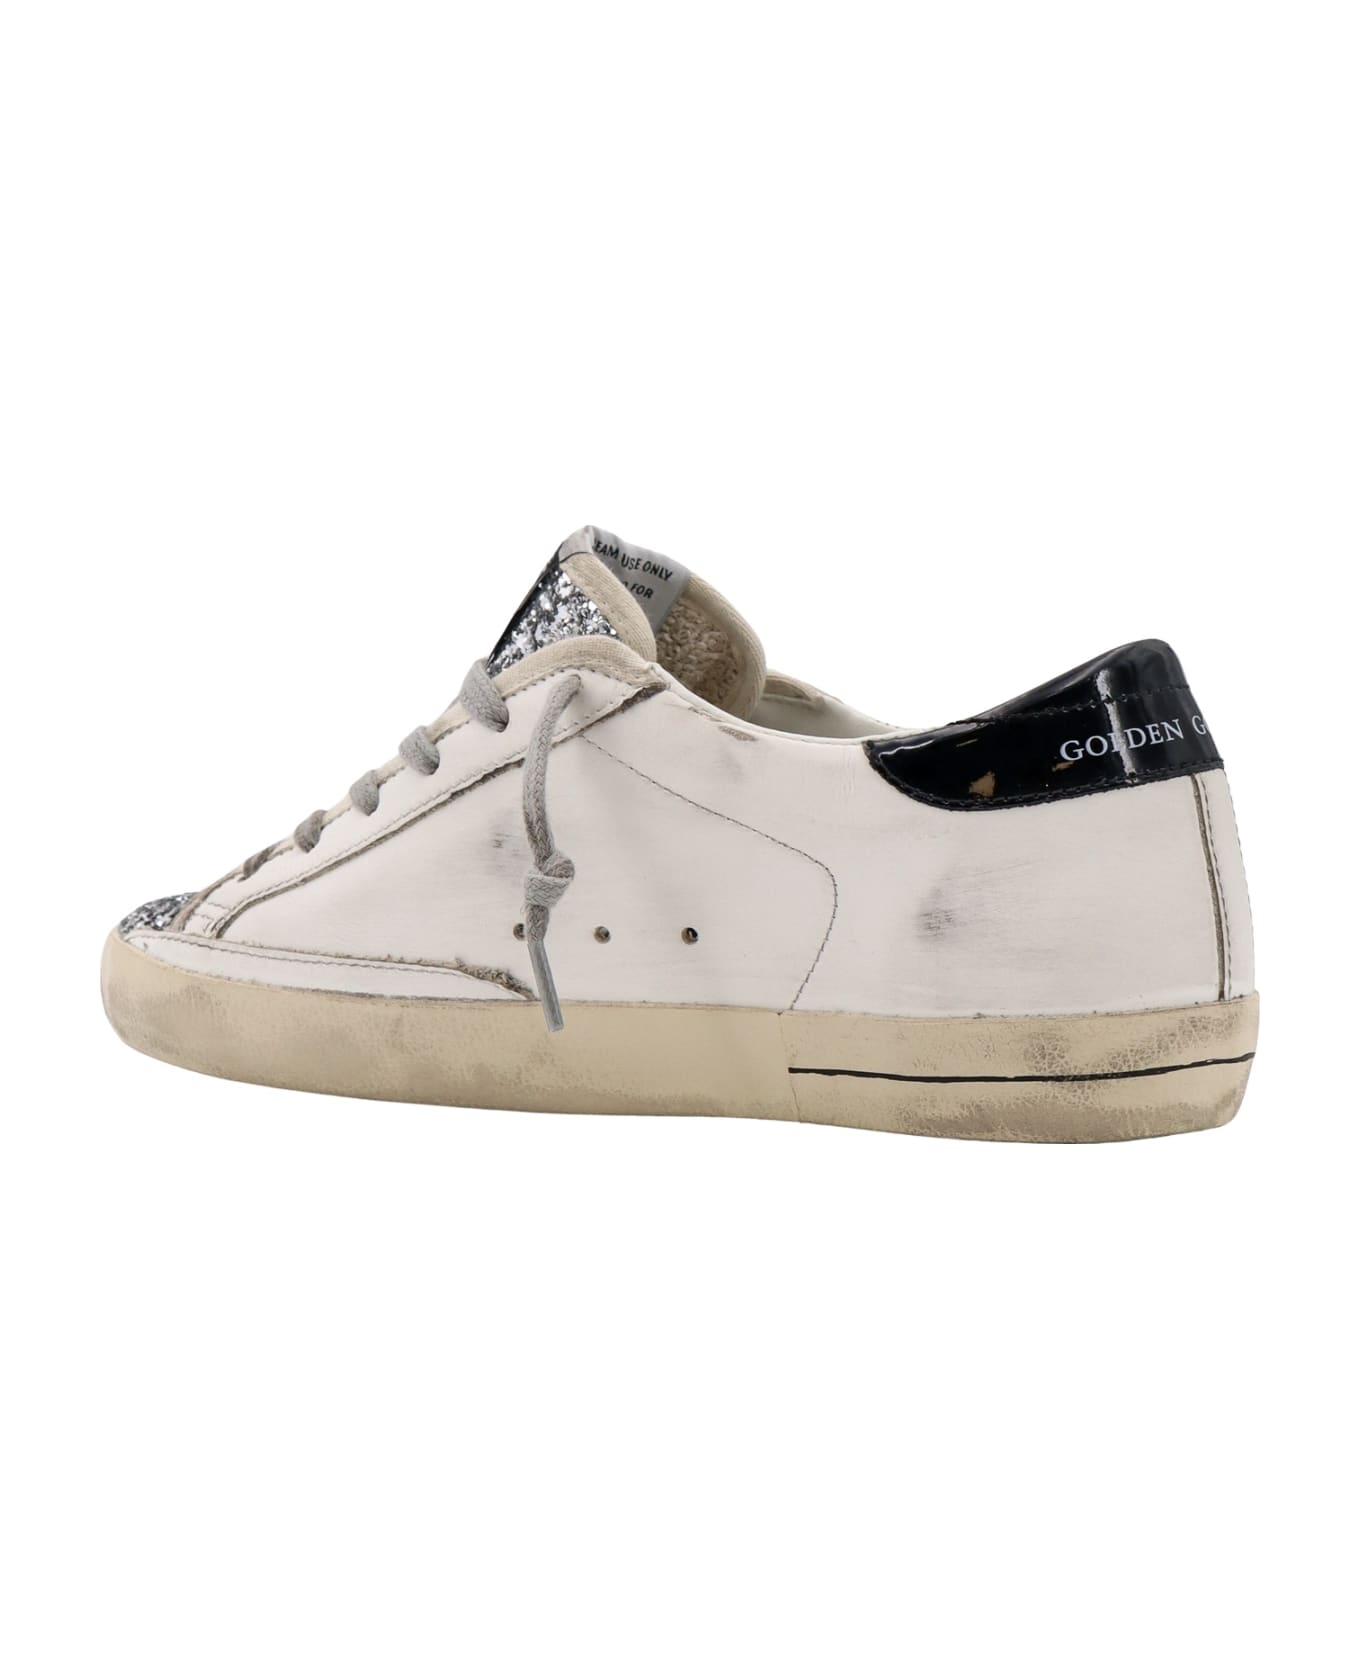 Golden Goose Super-star Sneakers - White